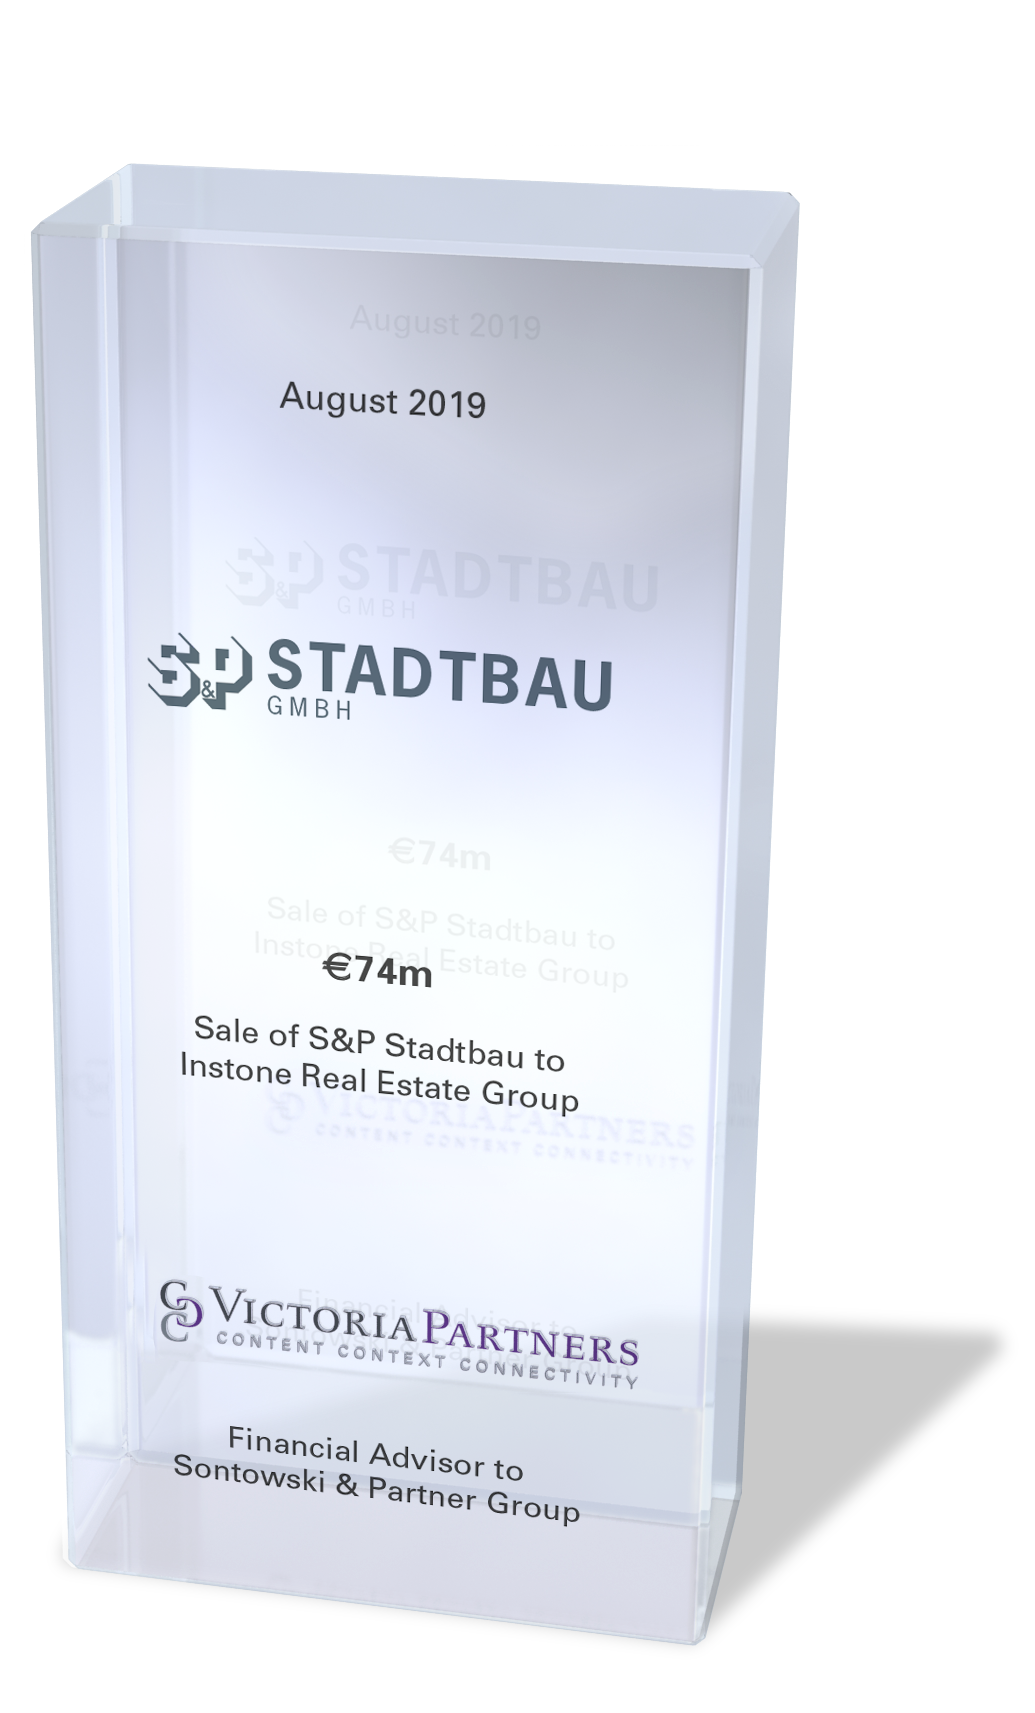 VICTORIAPARTNERS - Financial Advisor to Sontowski & Partner Group - August 2019